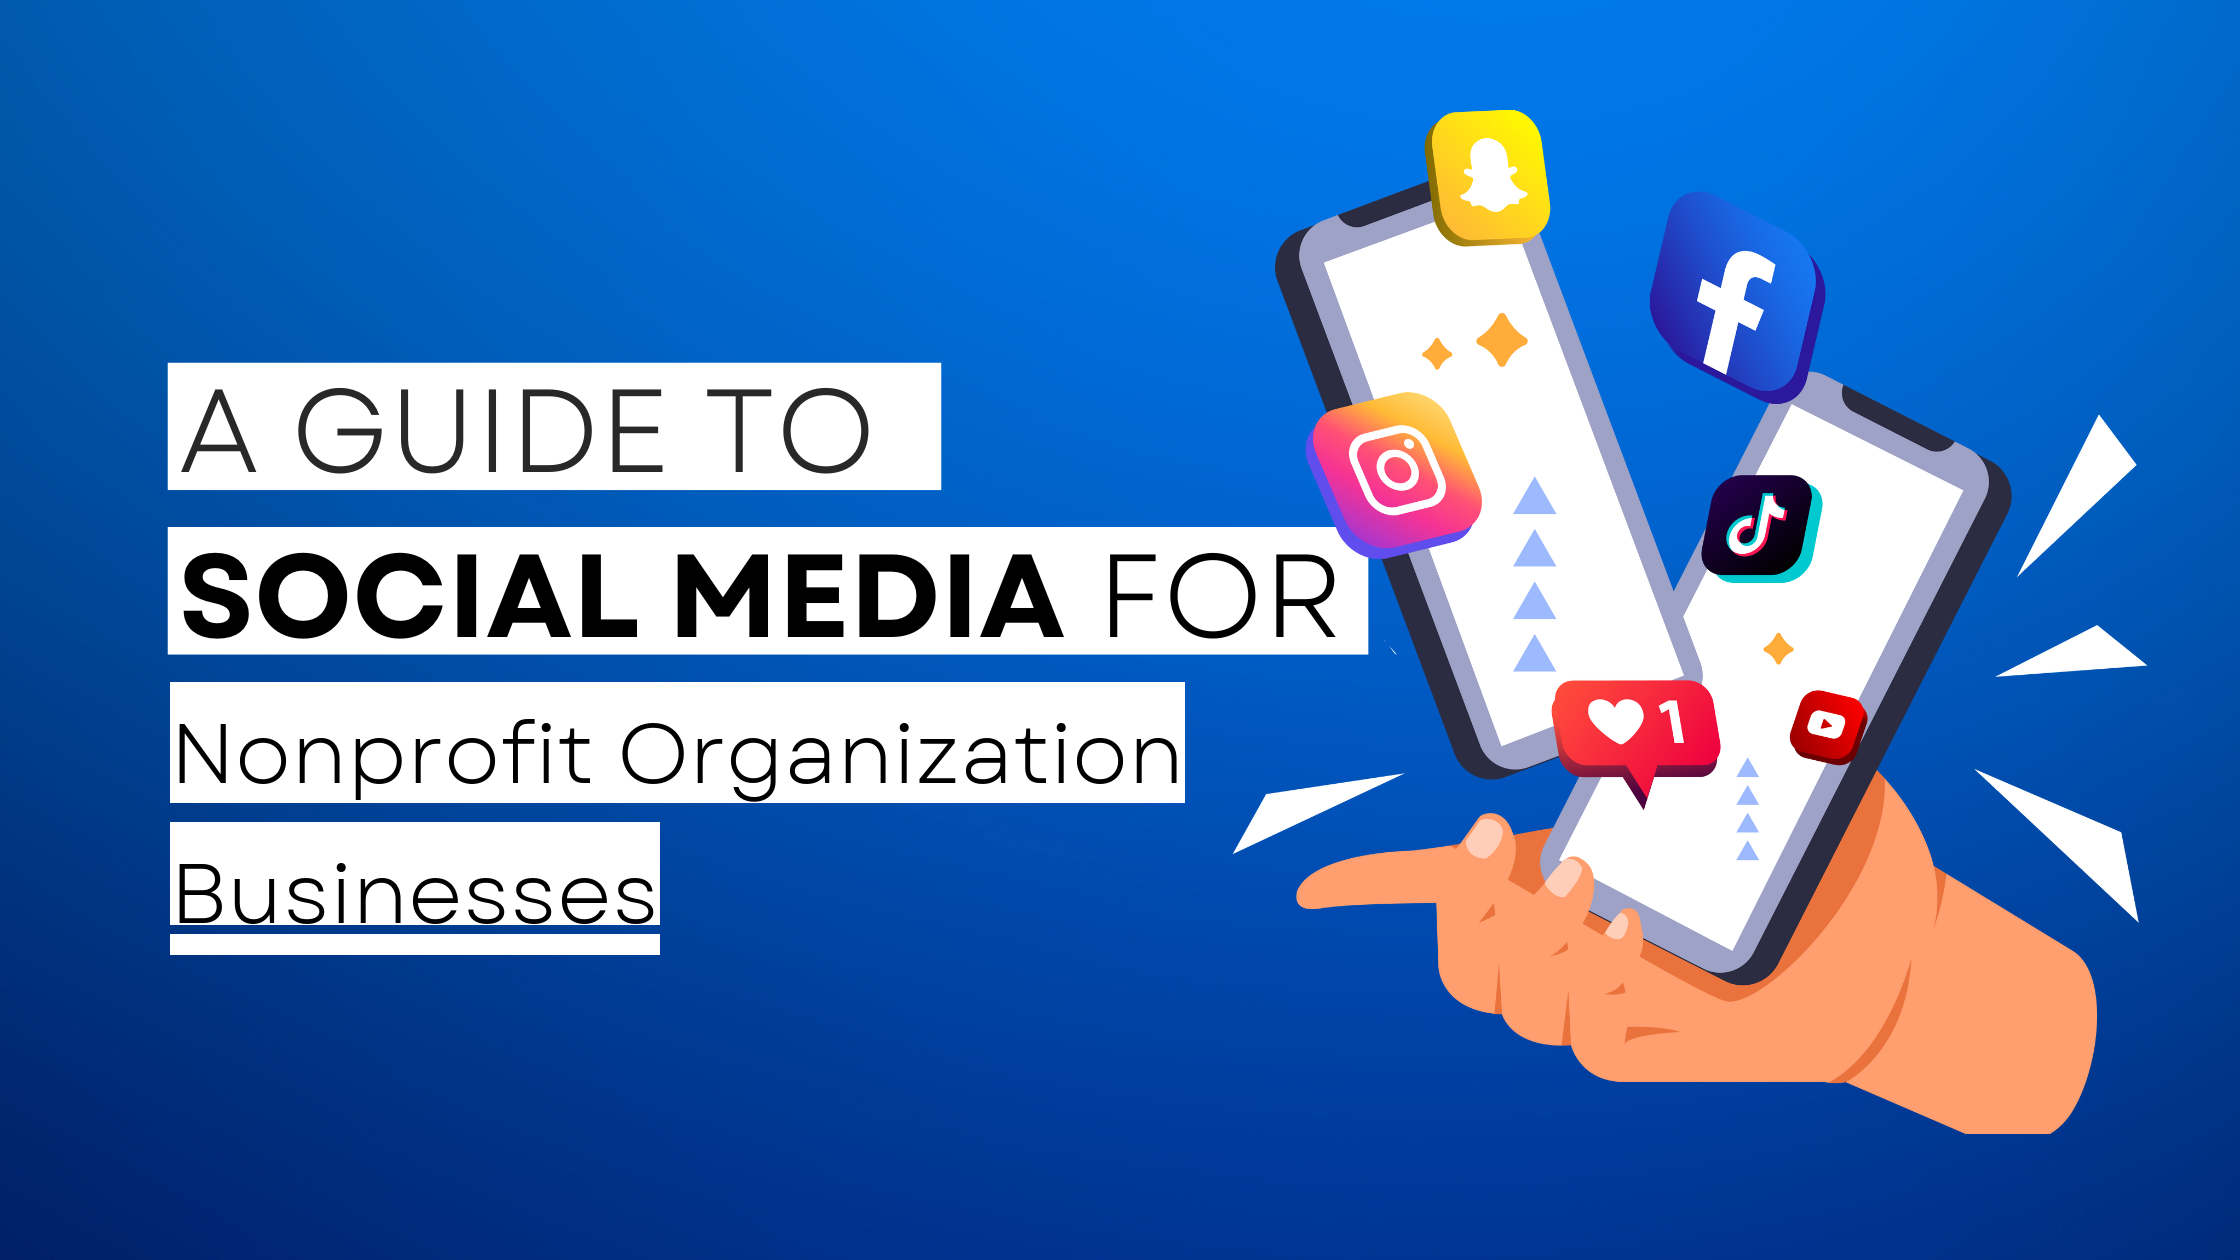 How to start Nonprofit Organization on social media